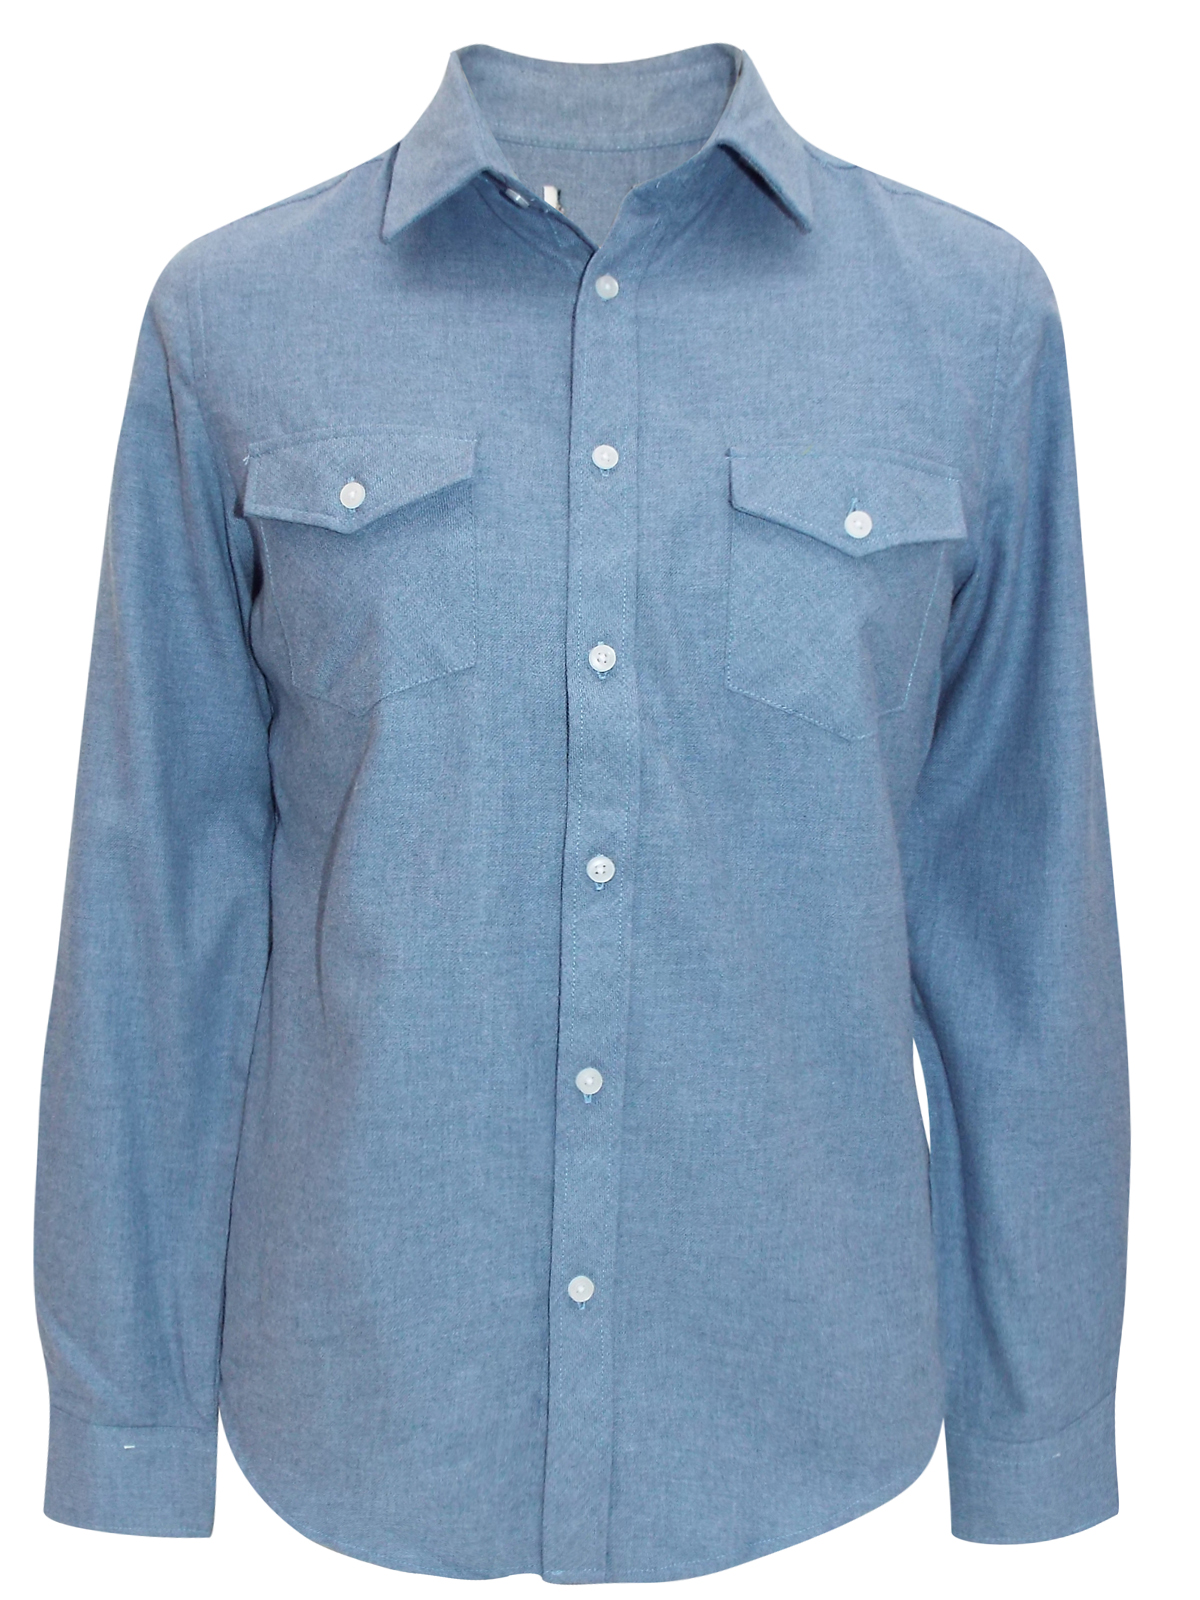 N3XT DENIM-BLUE Brushed Cotton Long Sleeve Shirt - Size Small to XXLarge